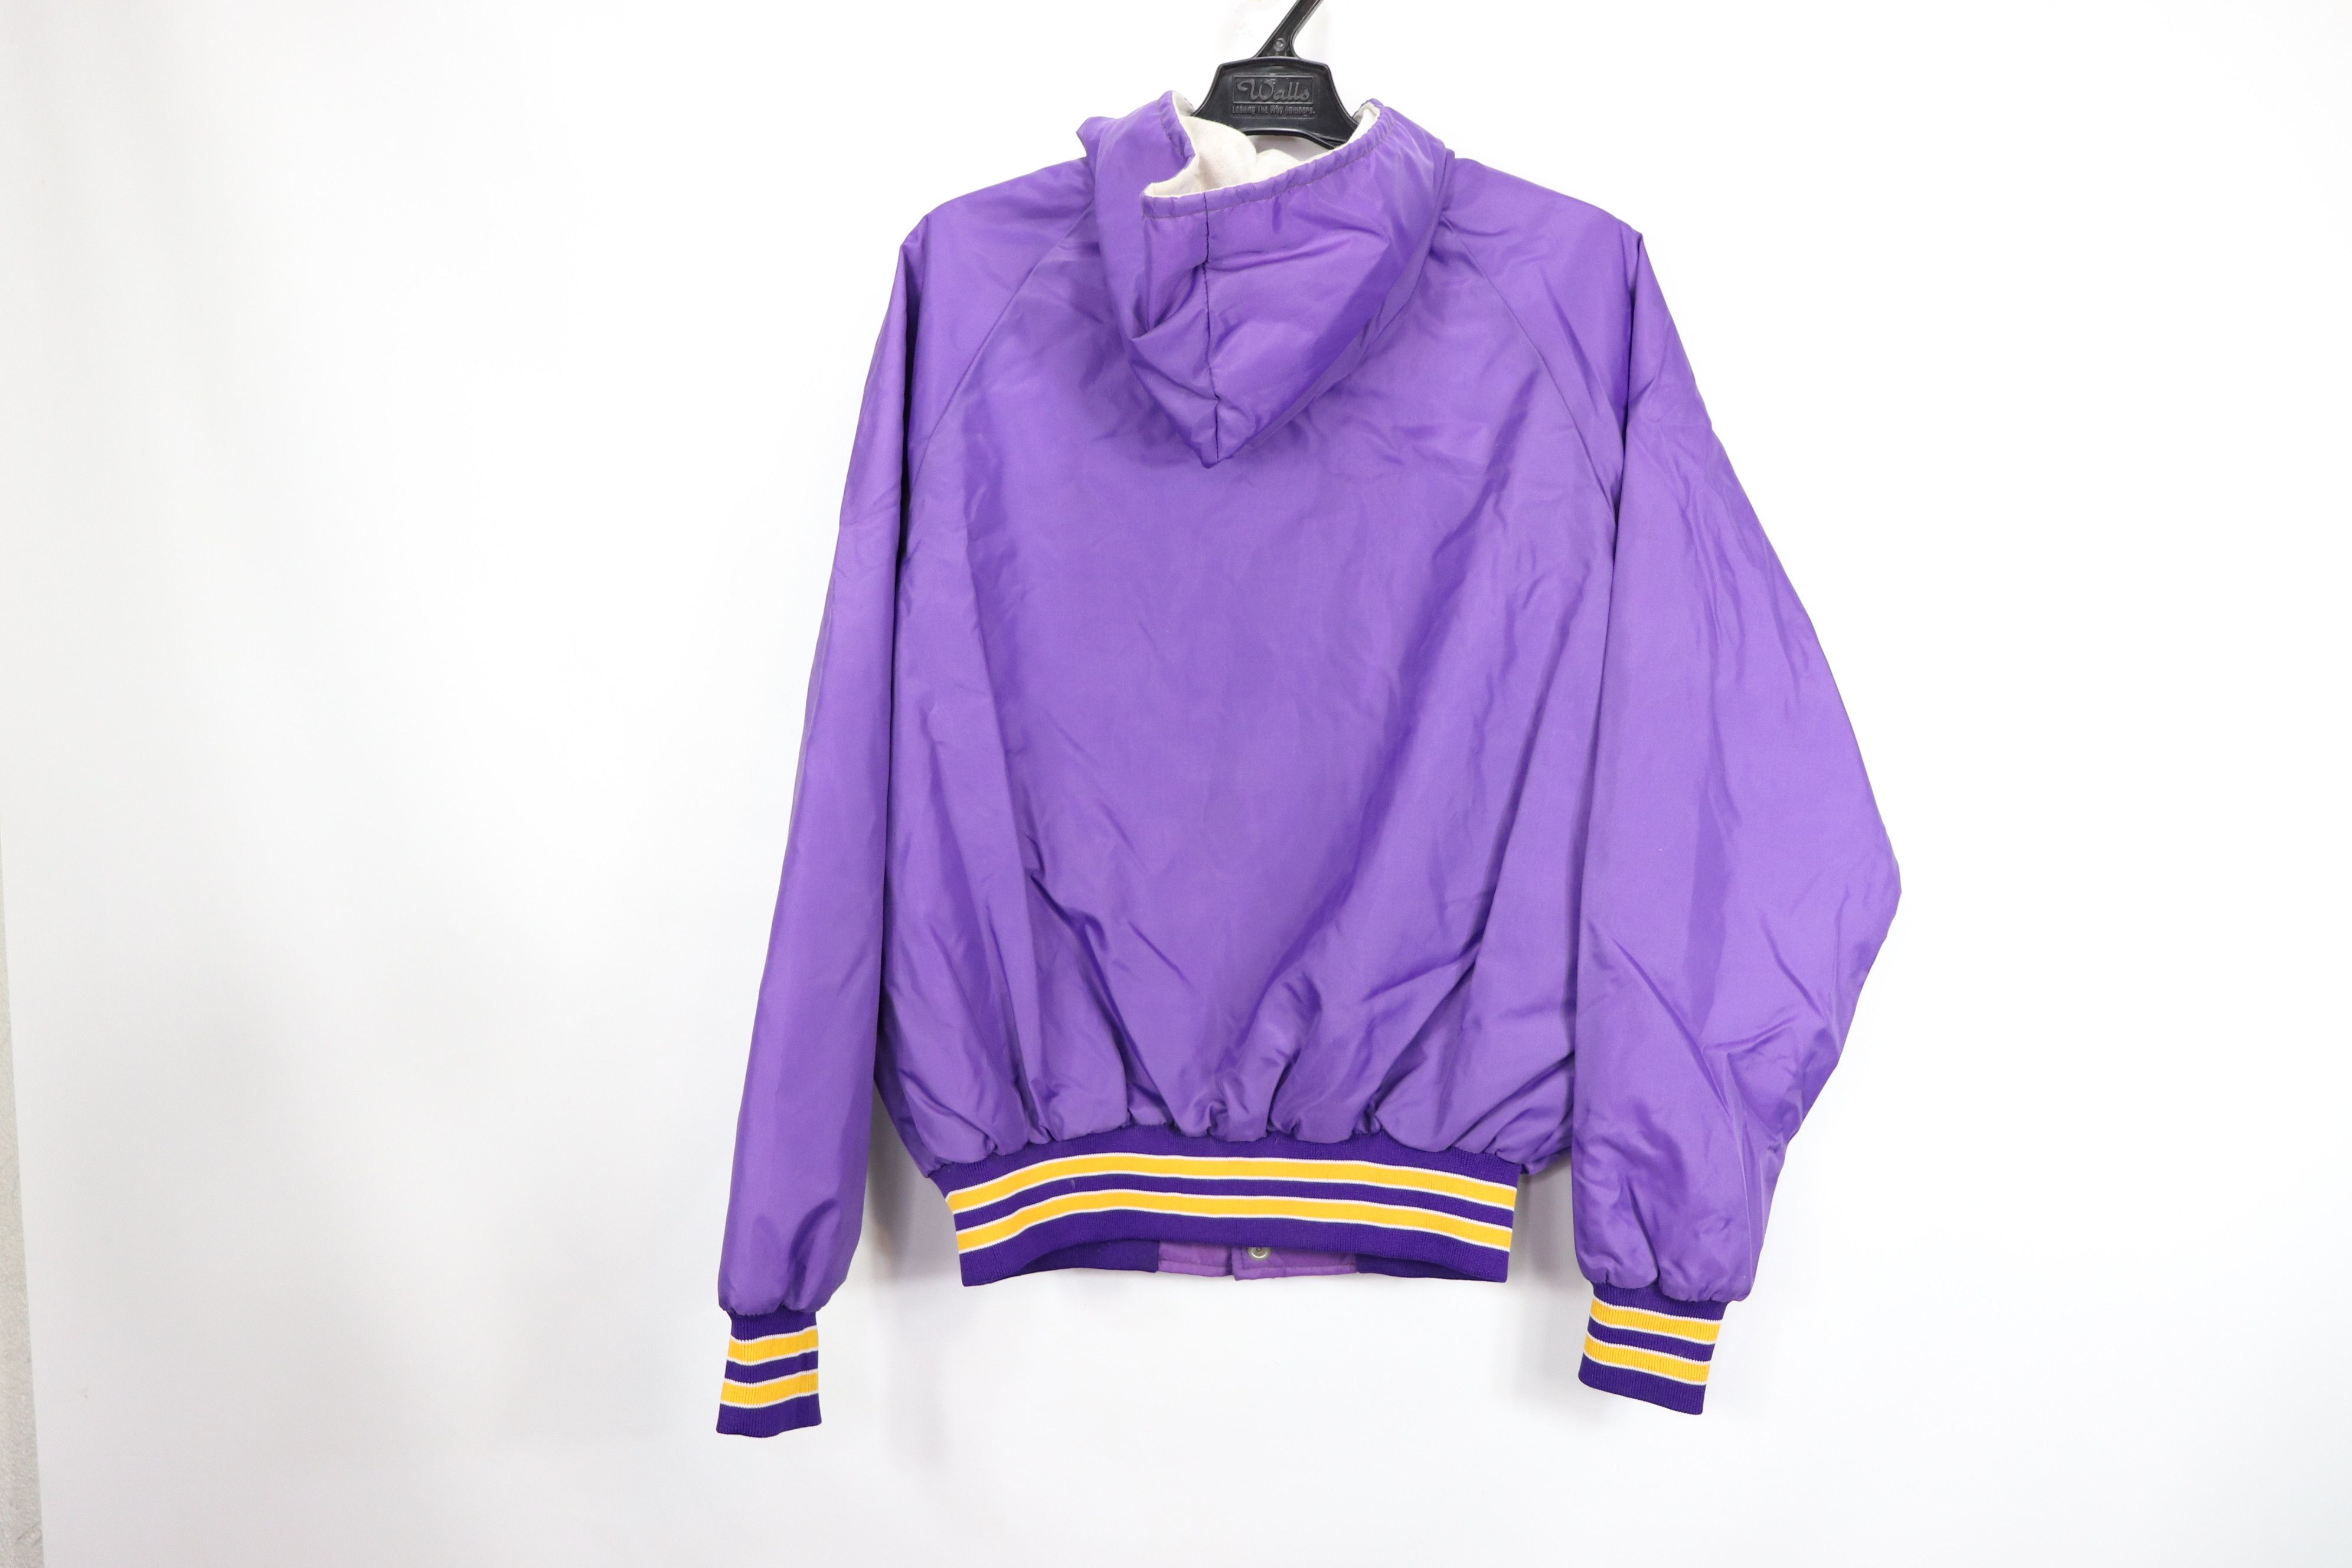 Vintage 80s Clarkfield Mens Medium Button Front Lined Hooded Varsity Jacket Purple Size US M / EU 48-50 / 2 - 4 Thumbnail